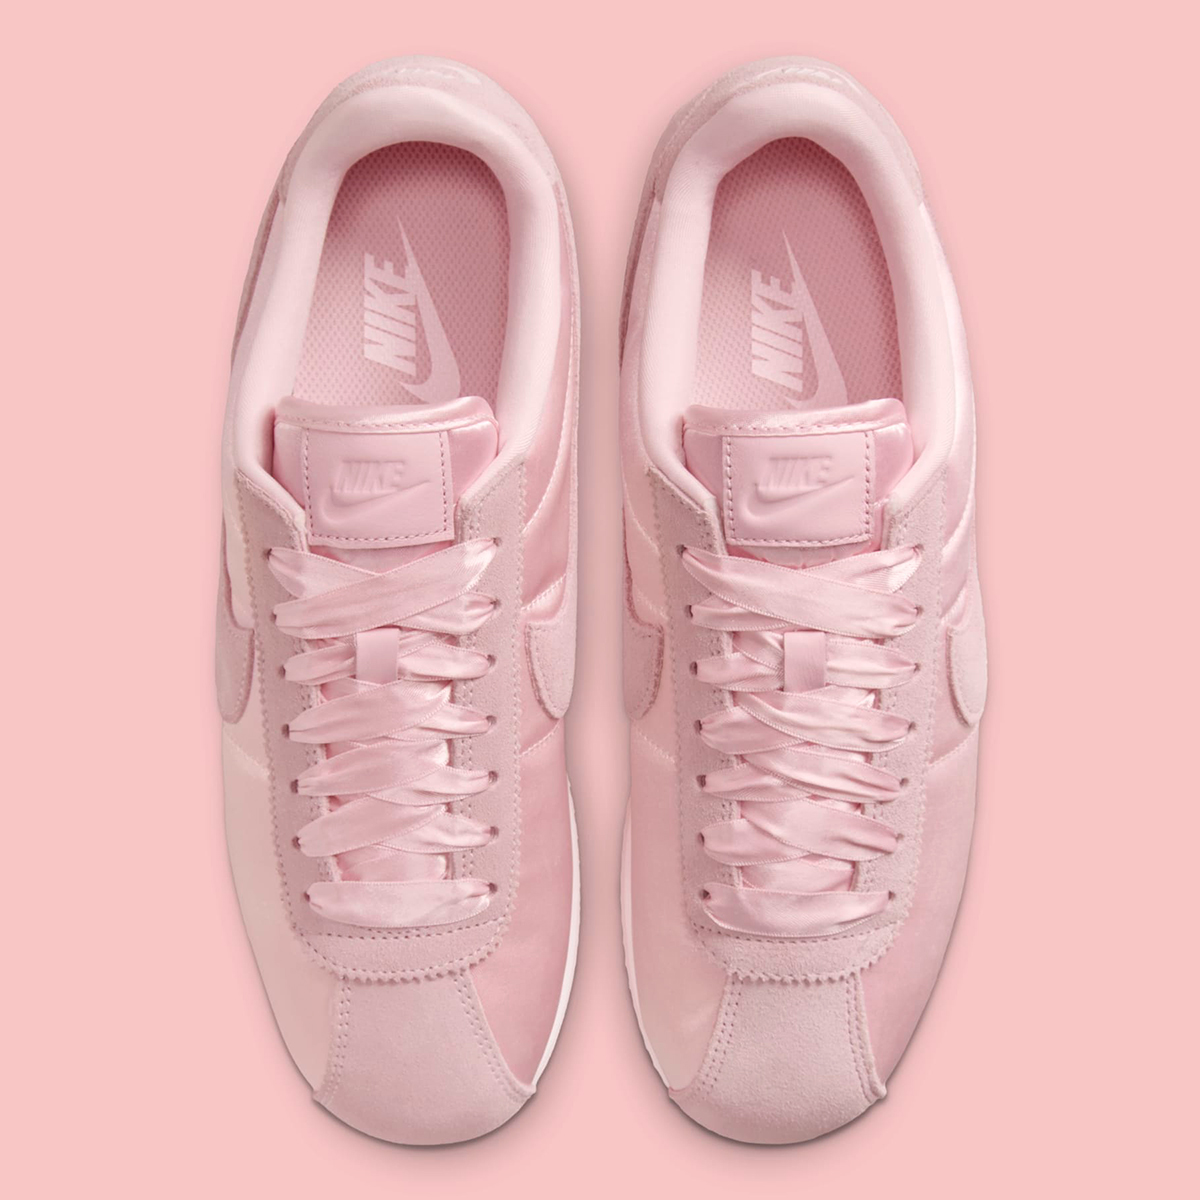 Nike Cortez Womens Satin Pink Fv5420 600 6